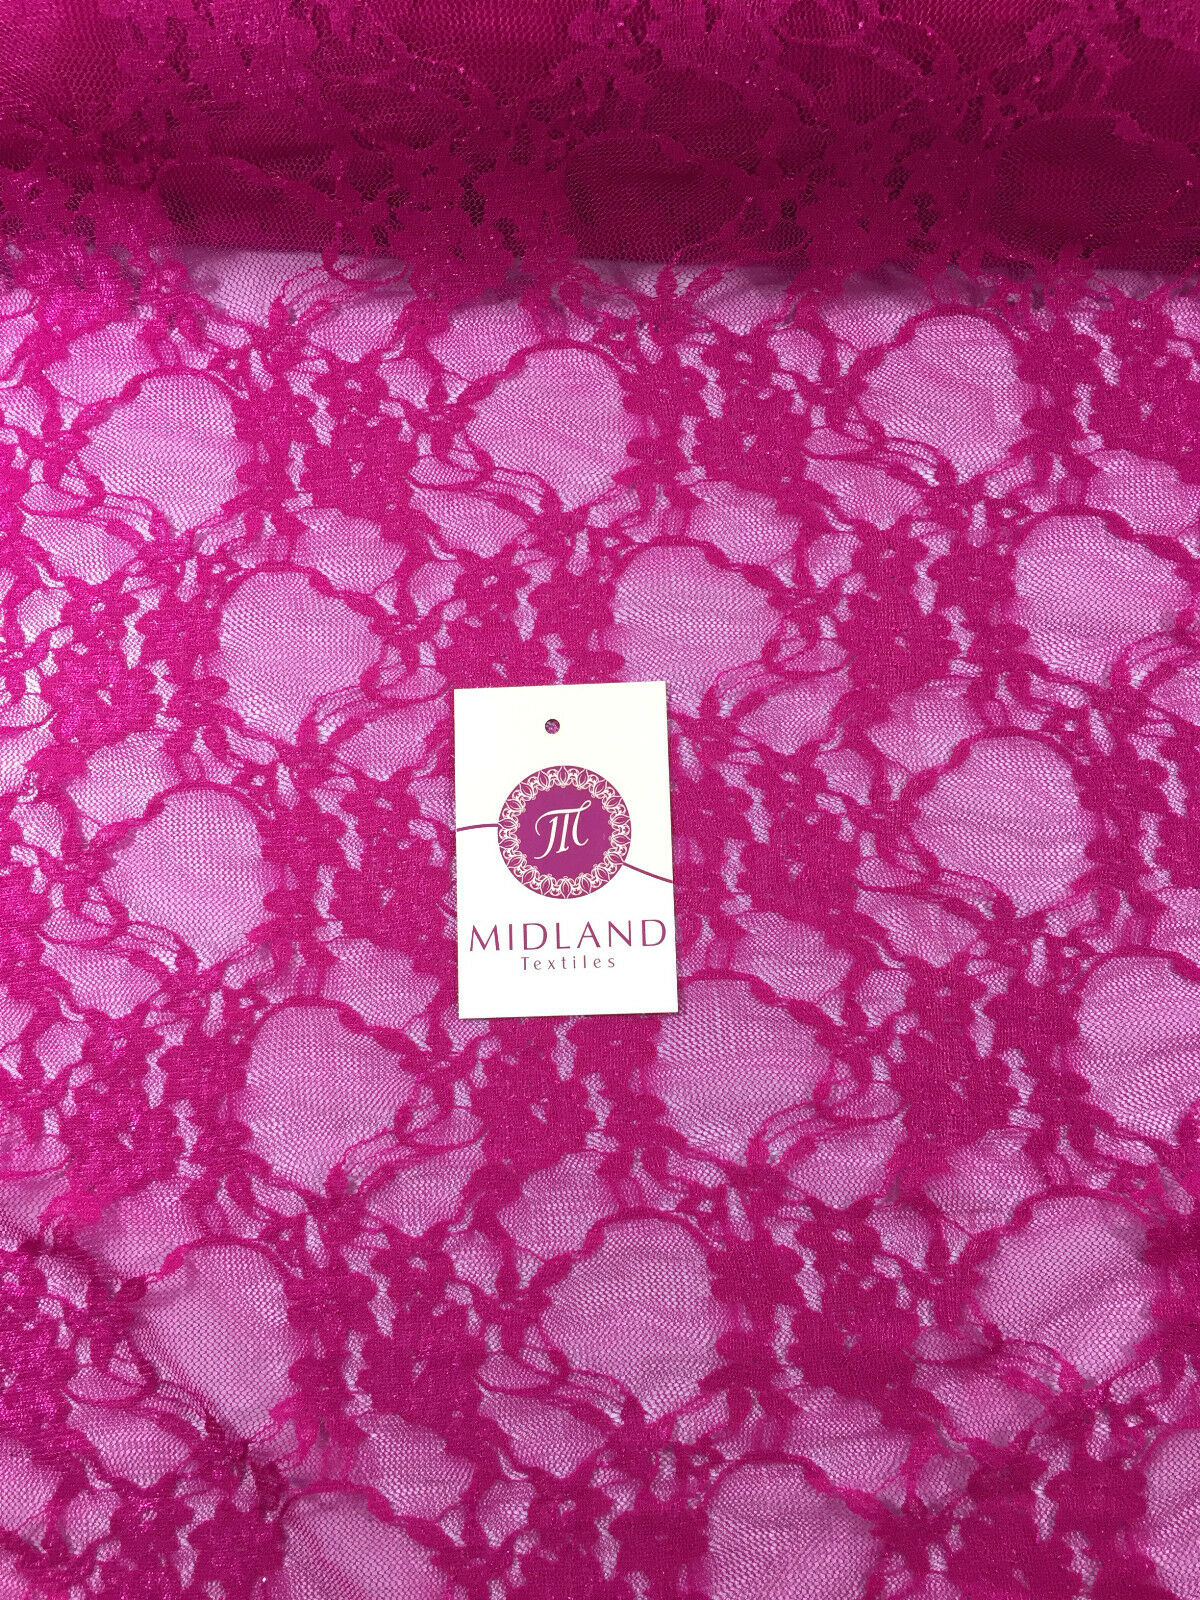 Floral Cersie Pink Lace Mesh Semi Transparent Dress fabric 58" Wide M186-17 Mtex